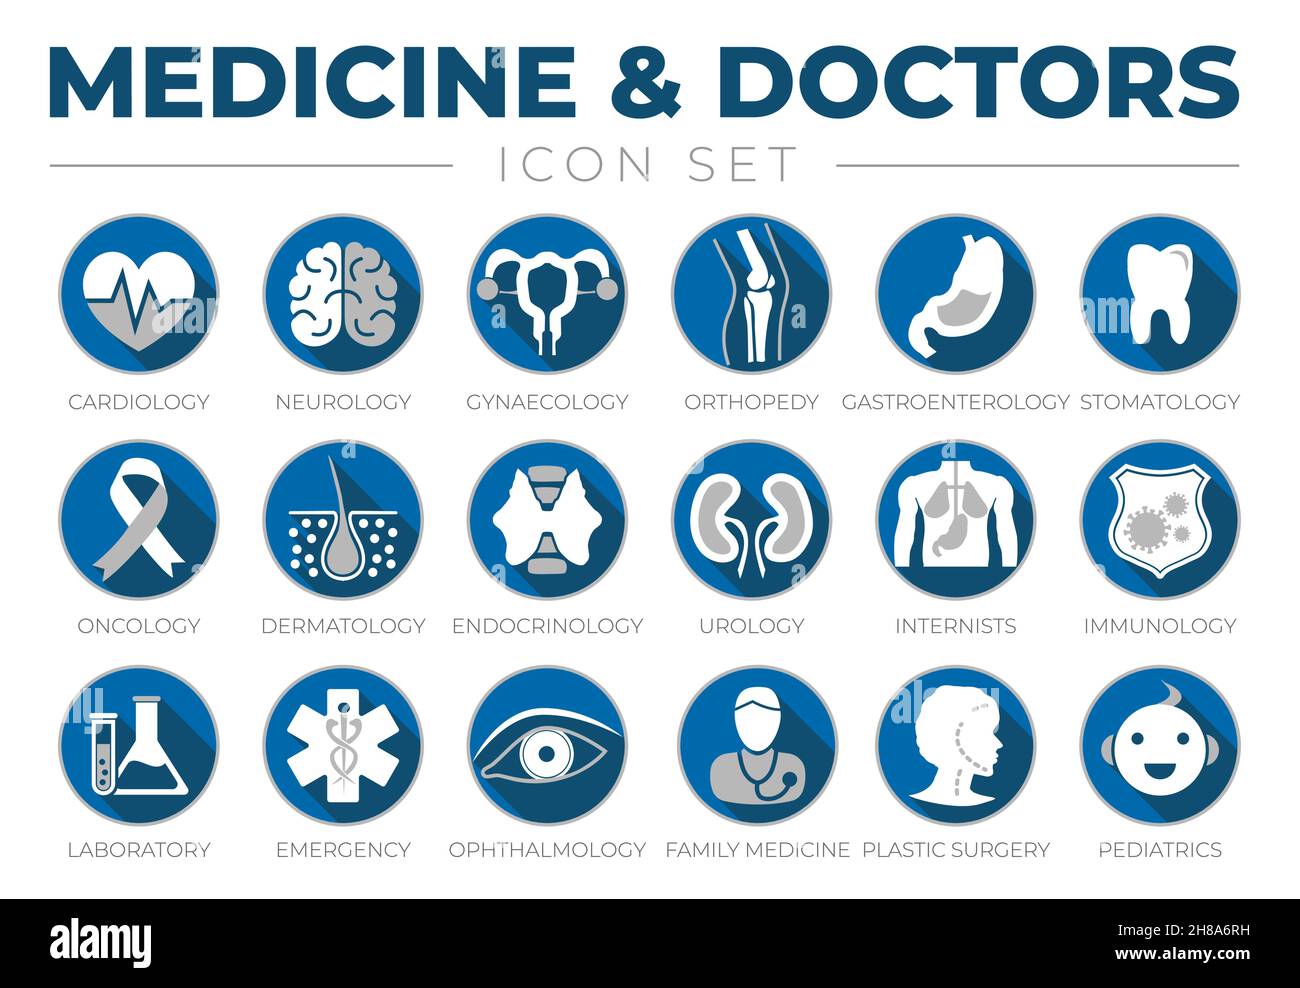 Icon Set of Cardiology, Neurology, Gynecology, Orthopedy, Gastroenterology, Stomatology,Oncology, Dermatology, Urology, Internists, Immunology, Labora Stock Vector